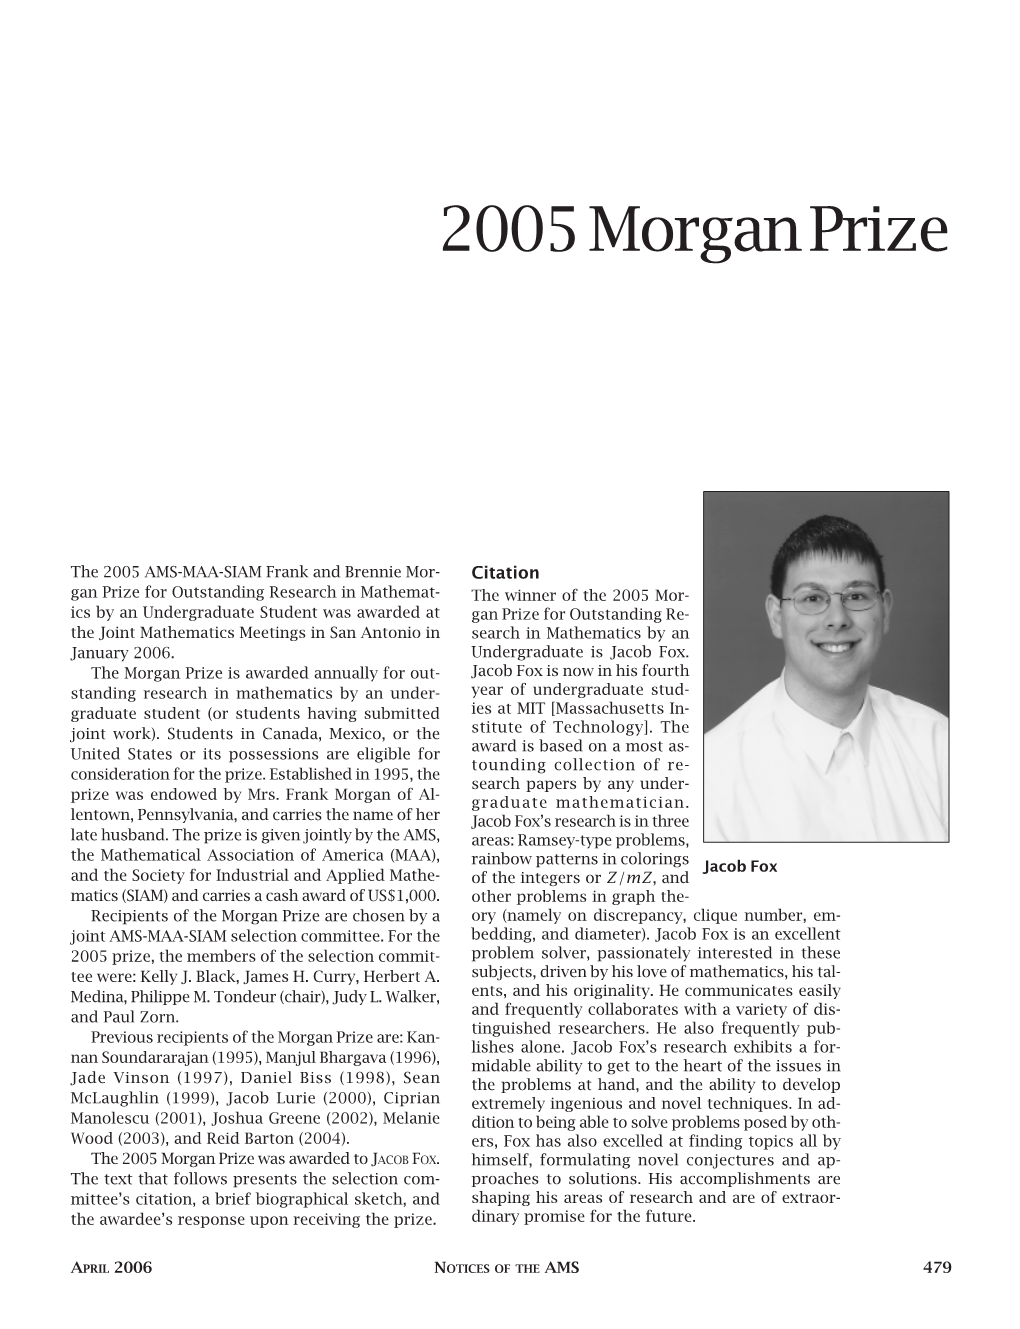 2005 Morgan Prize, Volume 53, Number 4